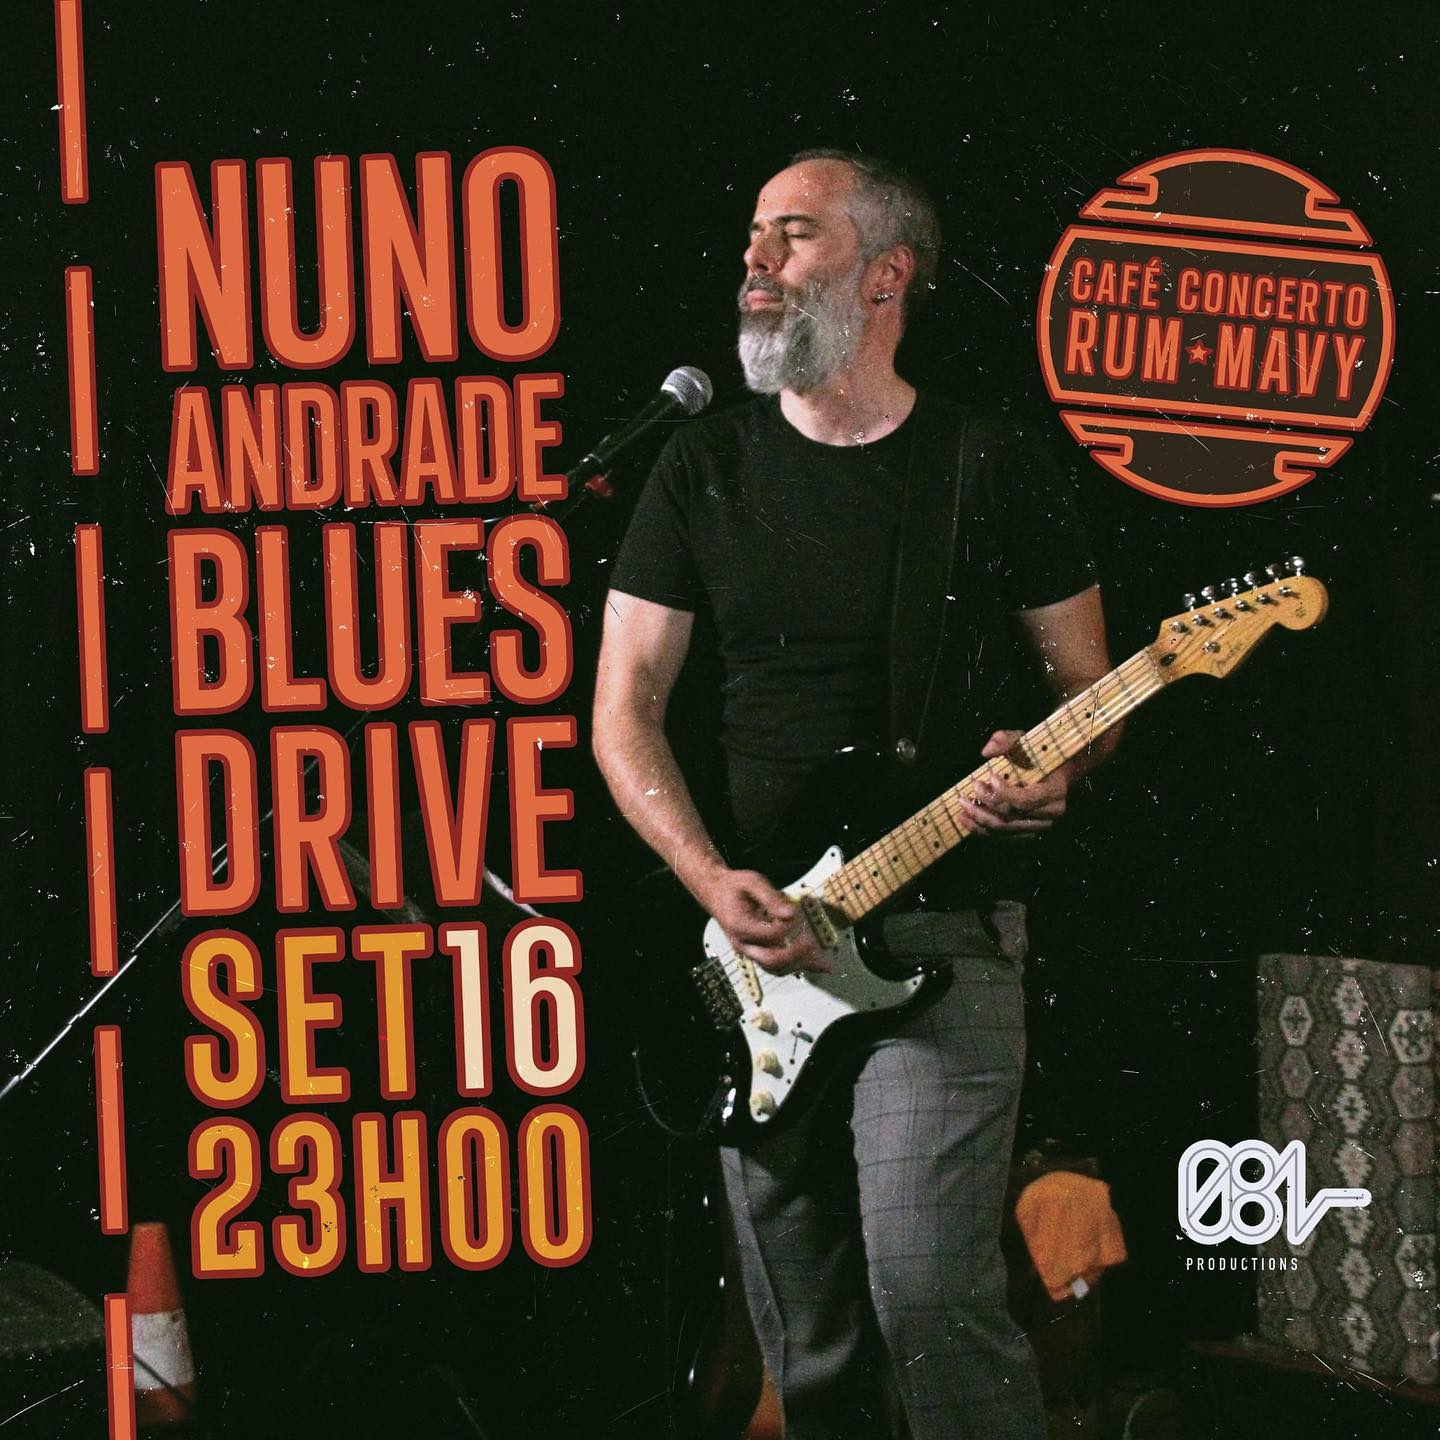 Nuno Andrade Blues Drive -RUM BY MAVY - Braga